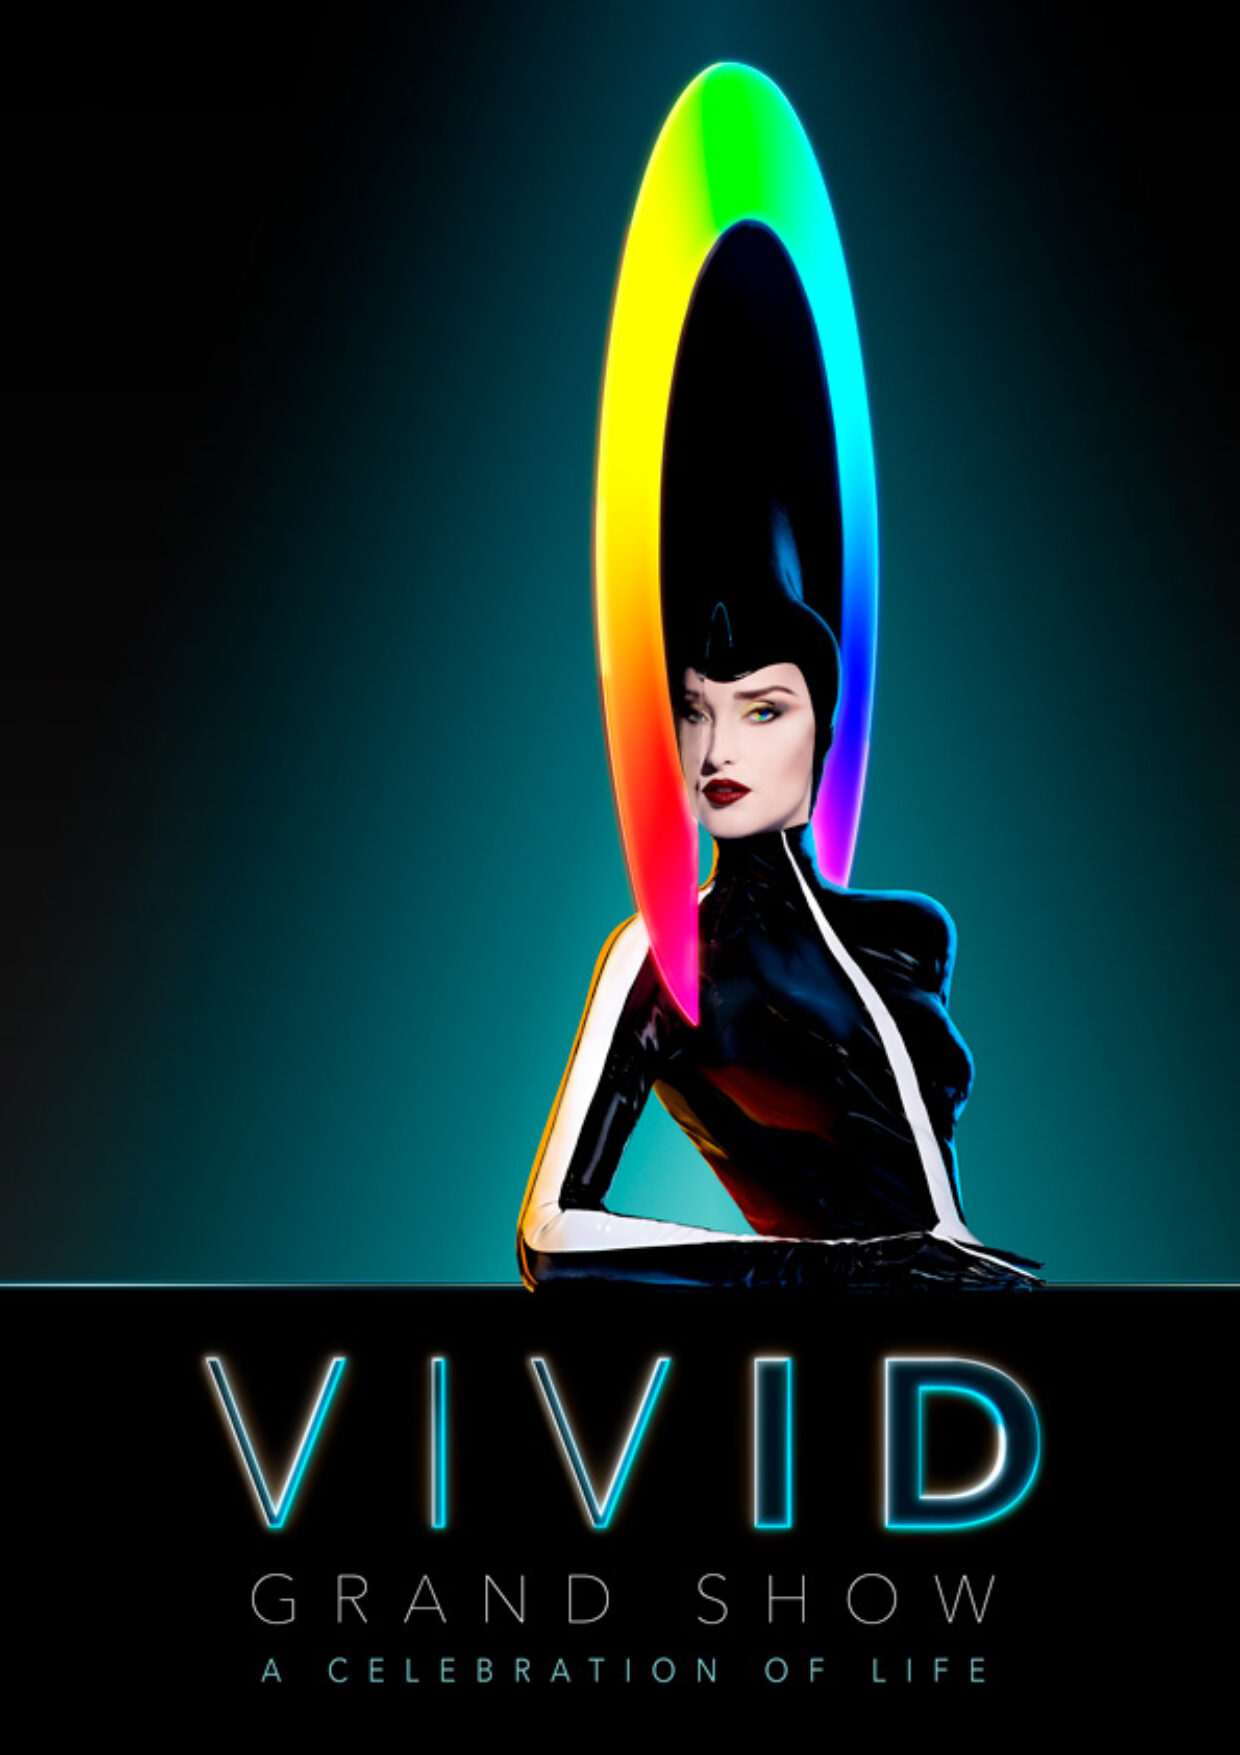 Philip Treacy is design director of VIVID Grand Show | 1